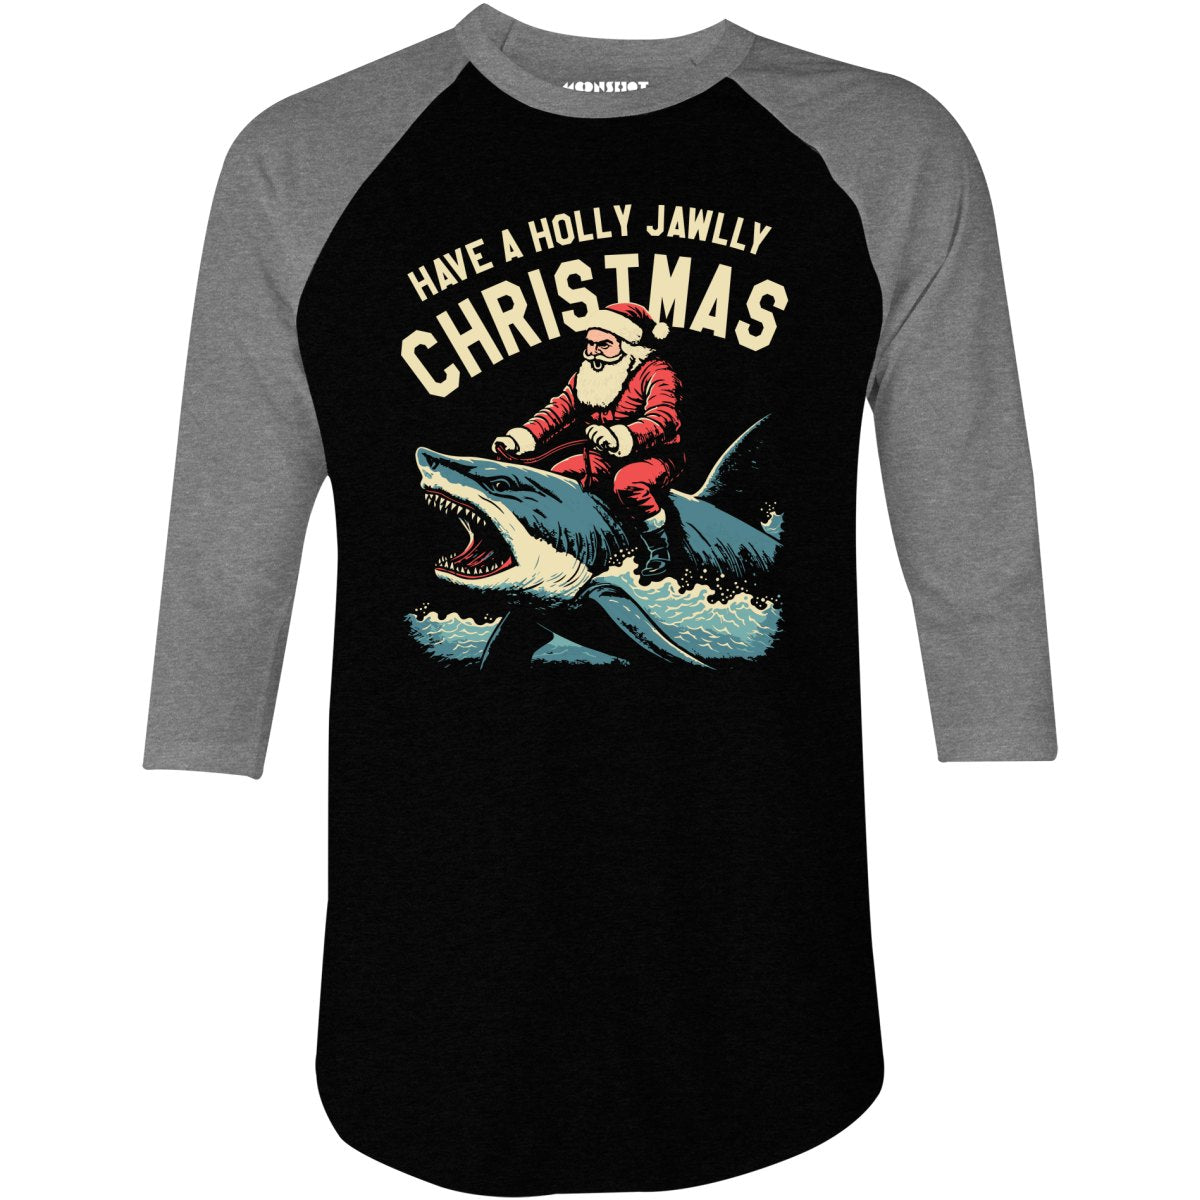 Have a Holly Jawlly Christmas - 3/4 Sleeve Raglan T-Shirt